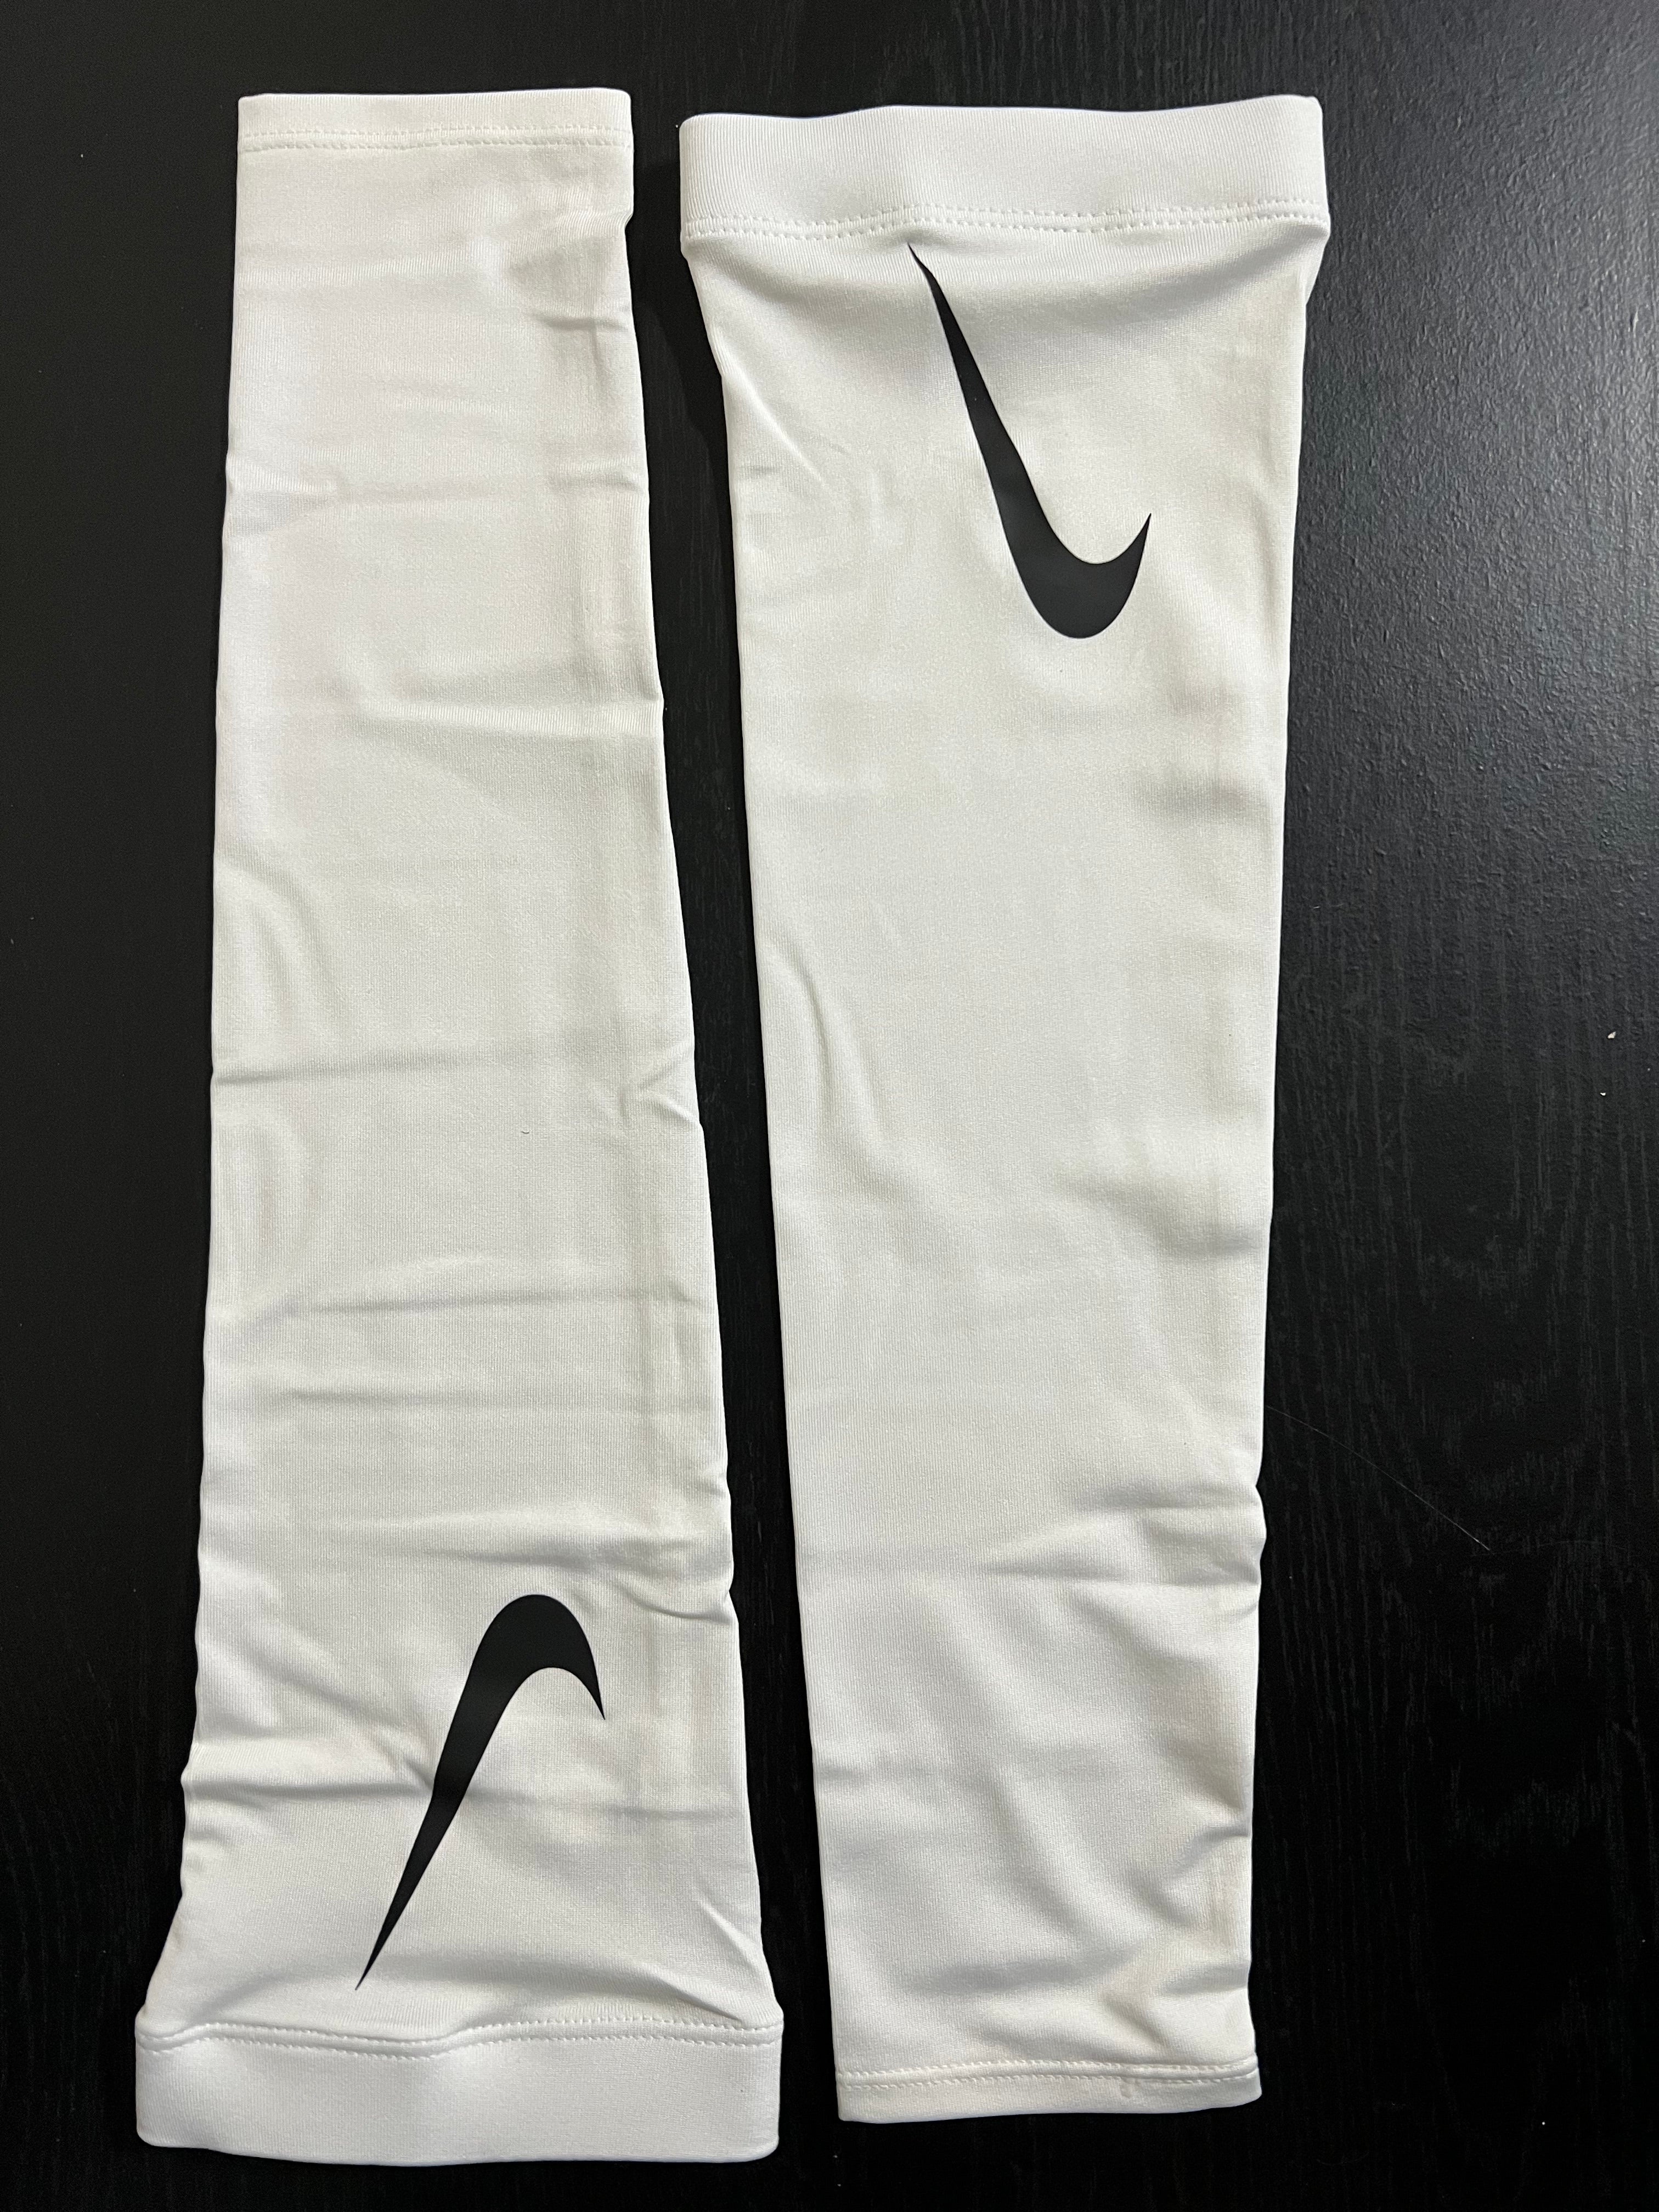 Nike Pro Football Sleeves for Sale in Las Vegas, NV - OfferUp